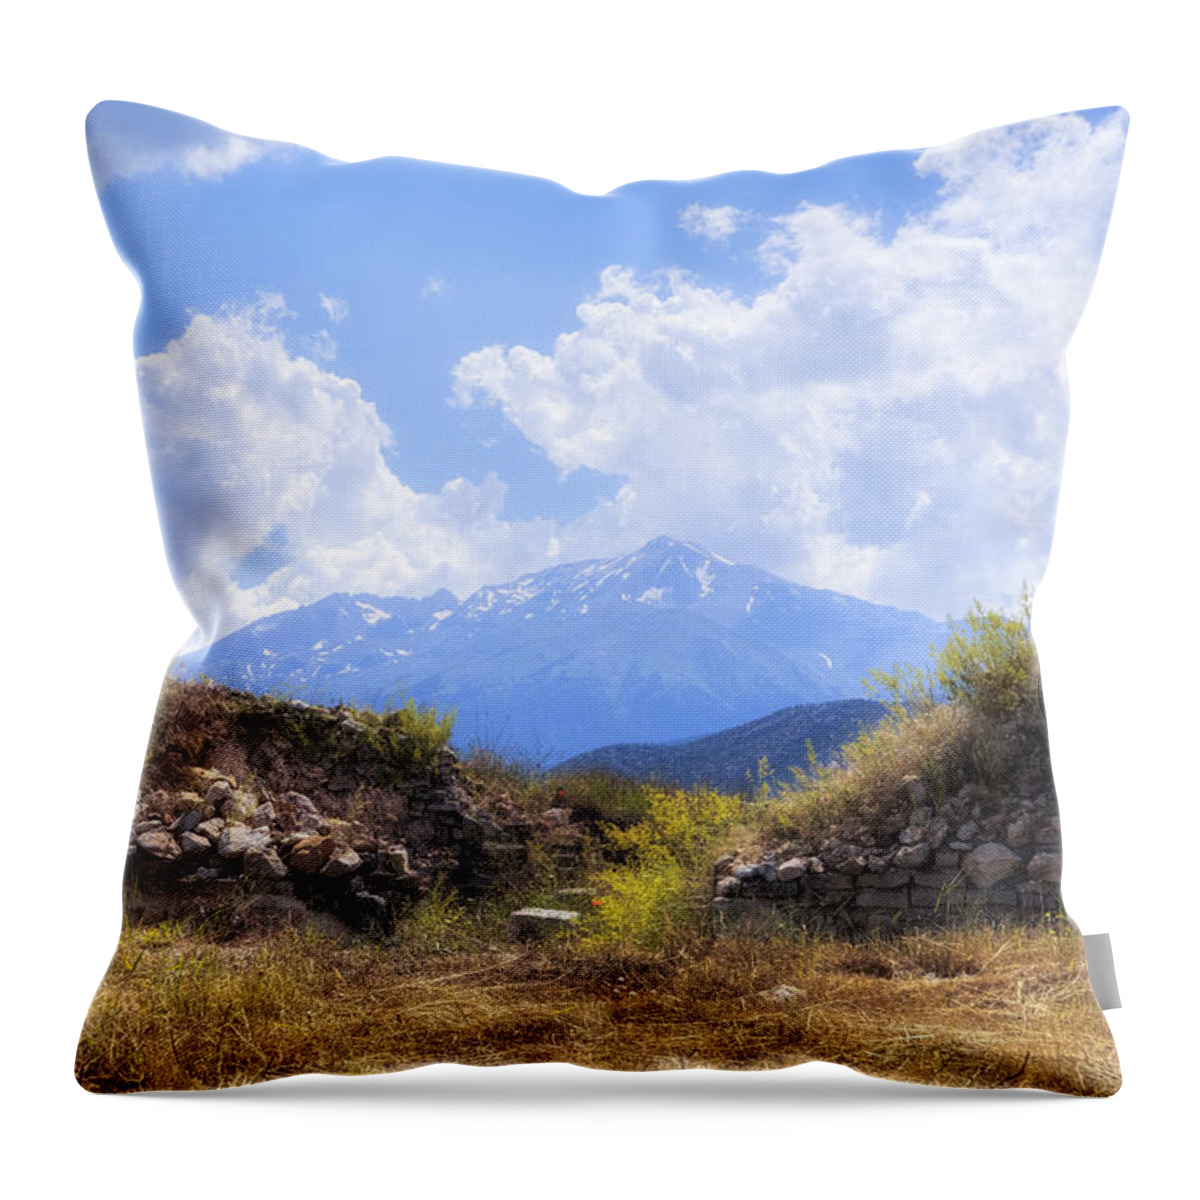 Dedegol Mountain Throw Pillow featuring the photograph Dedegol Mountain - Turkey #2 by Joana Kruse